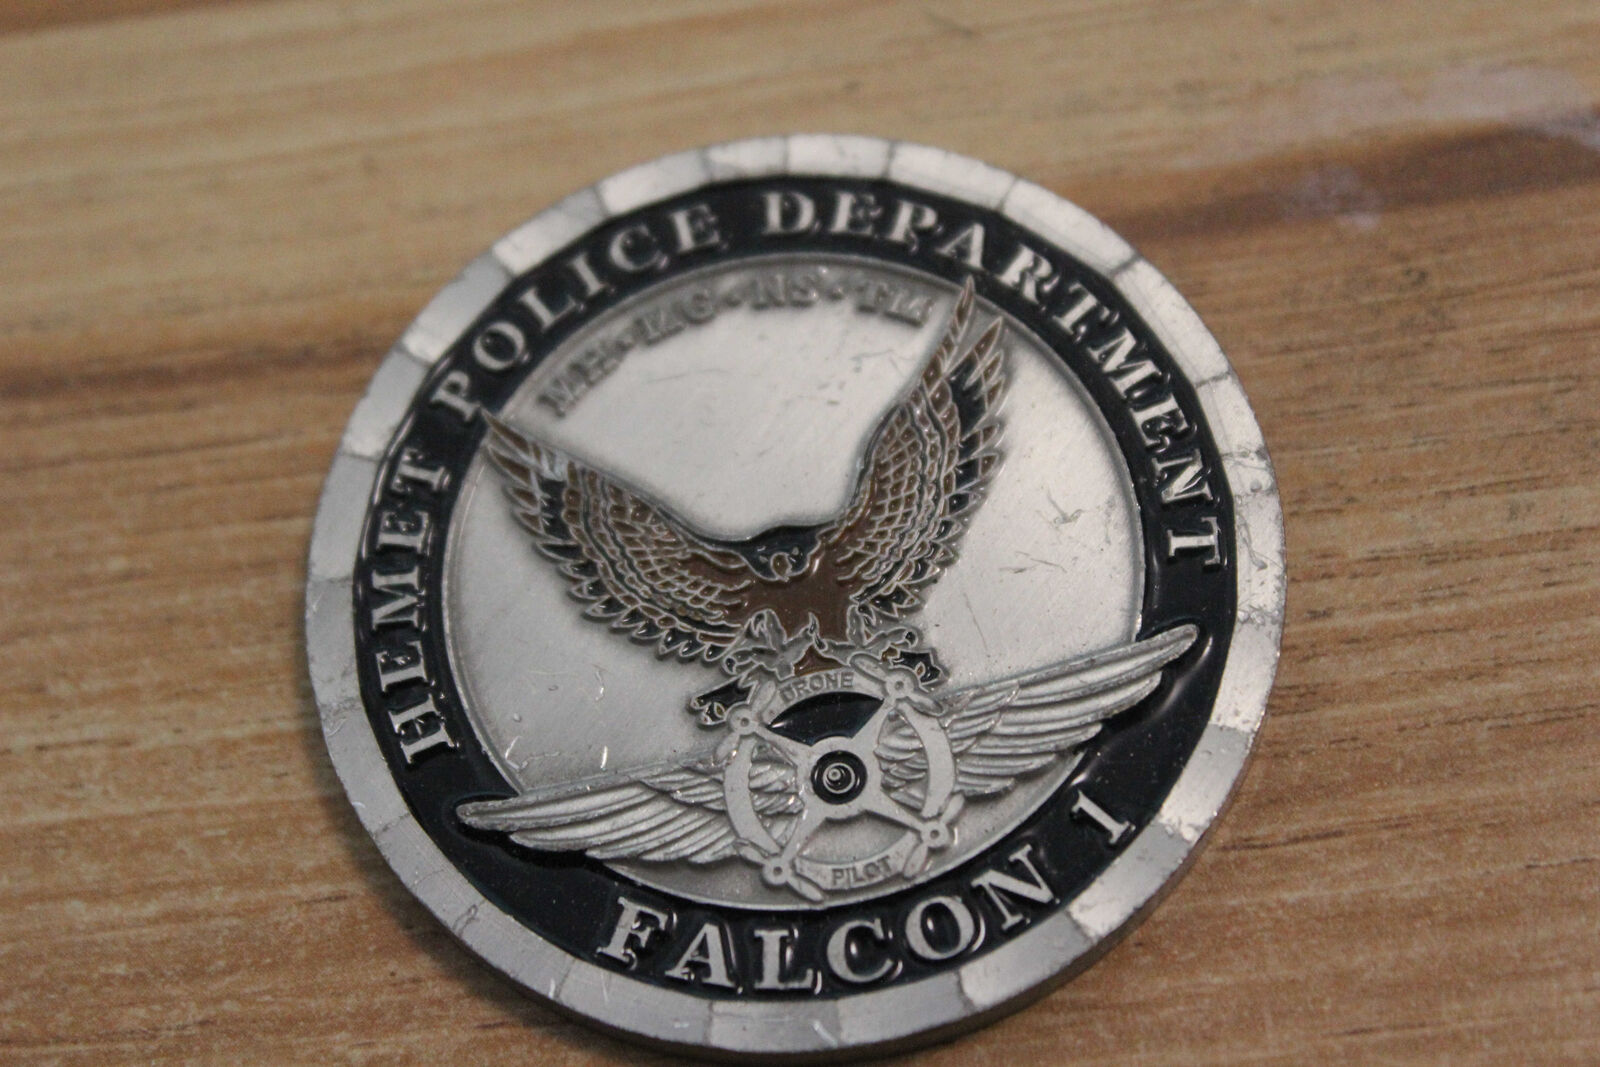 Hemet Police Department Falcon 1 Challenge Coin